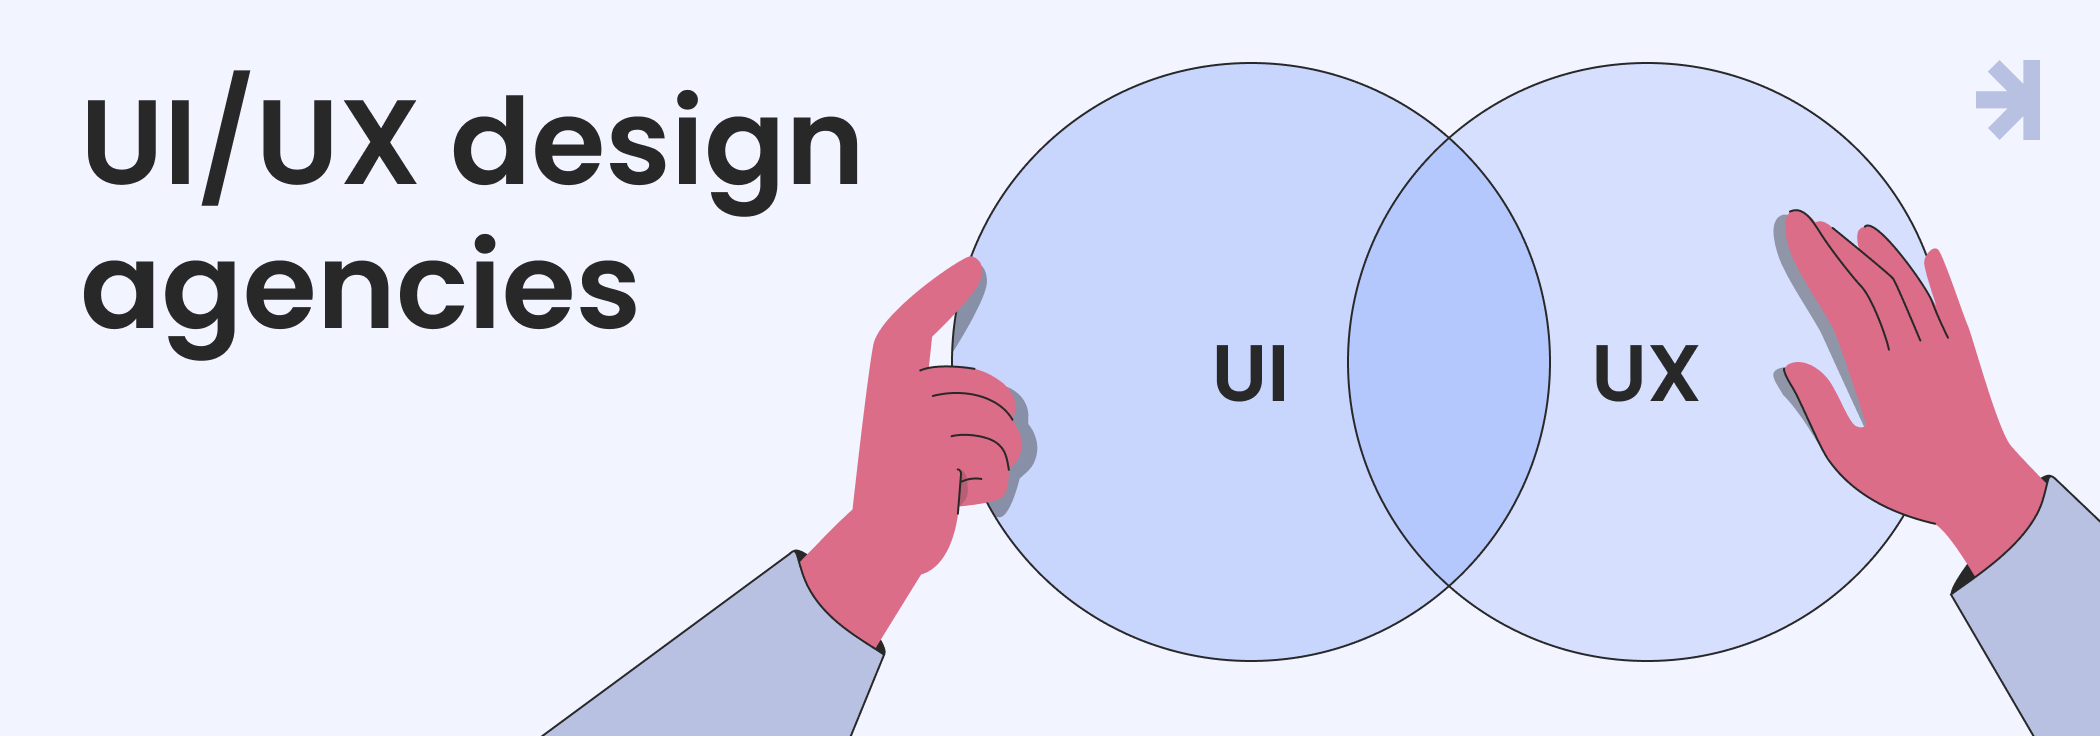 UI/UX design agencies